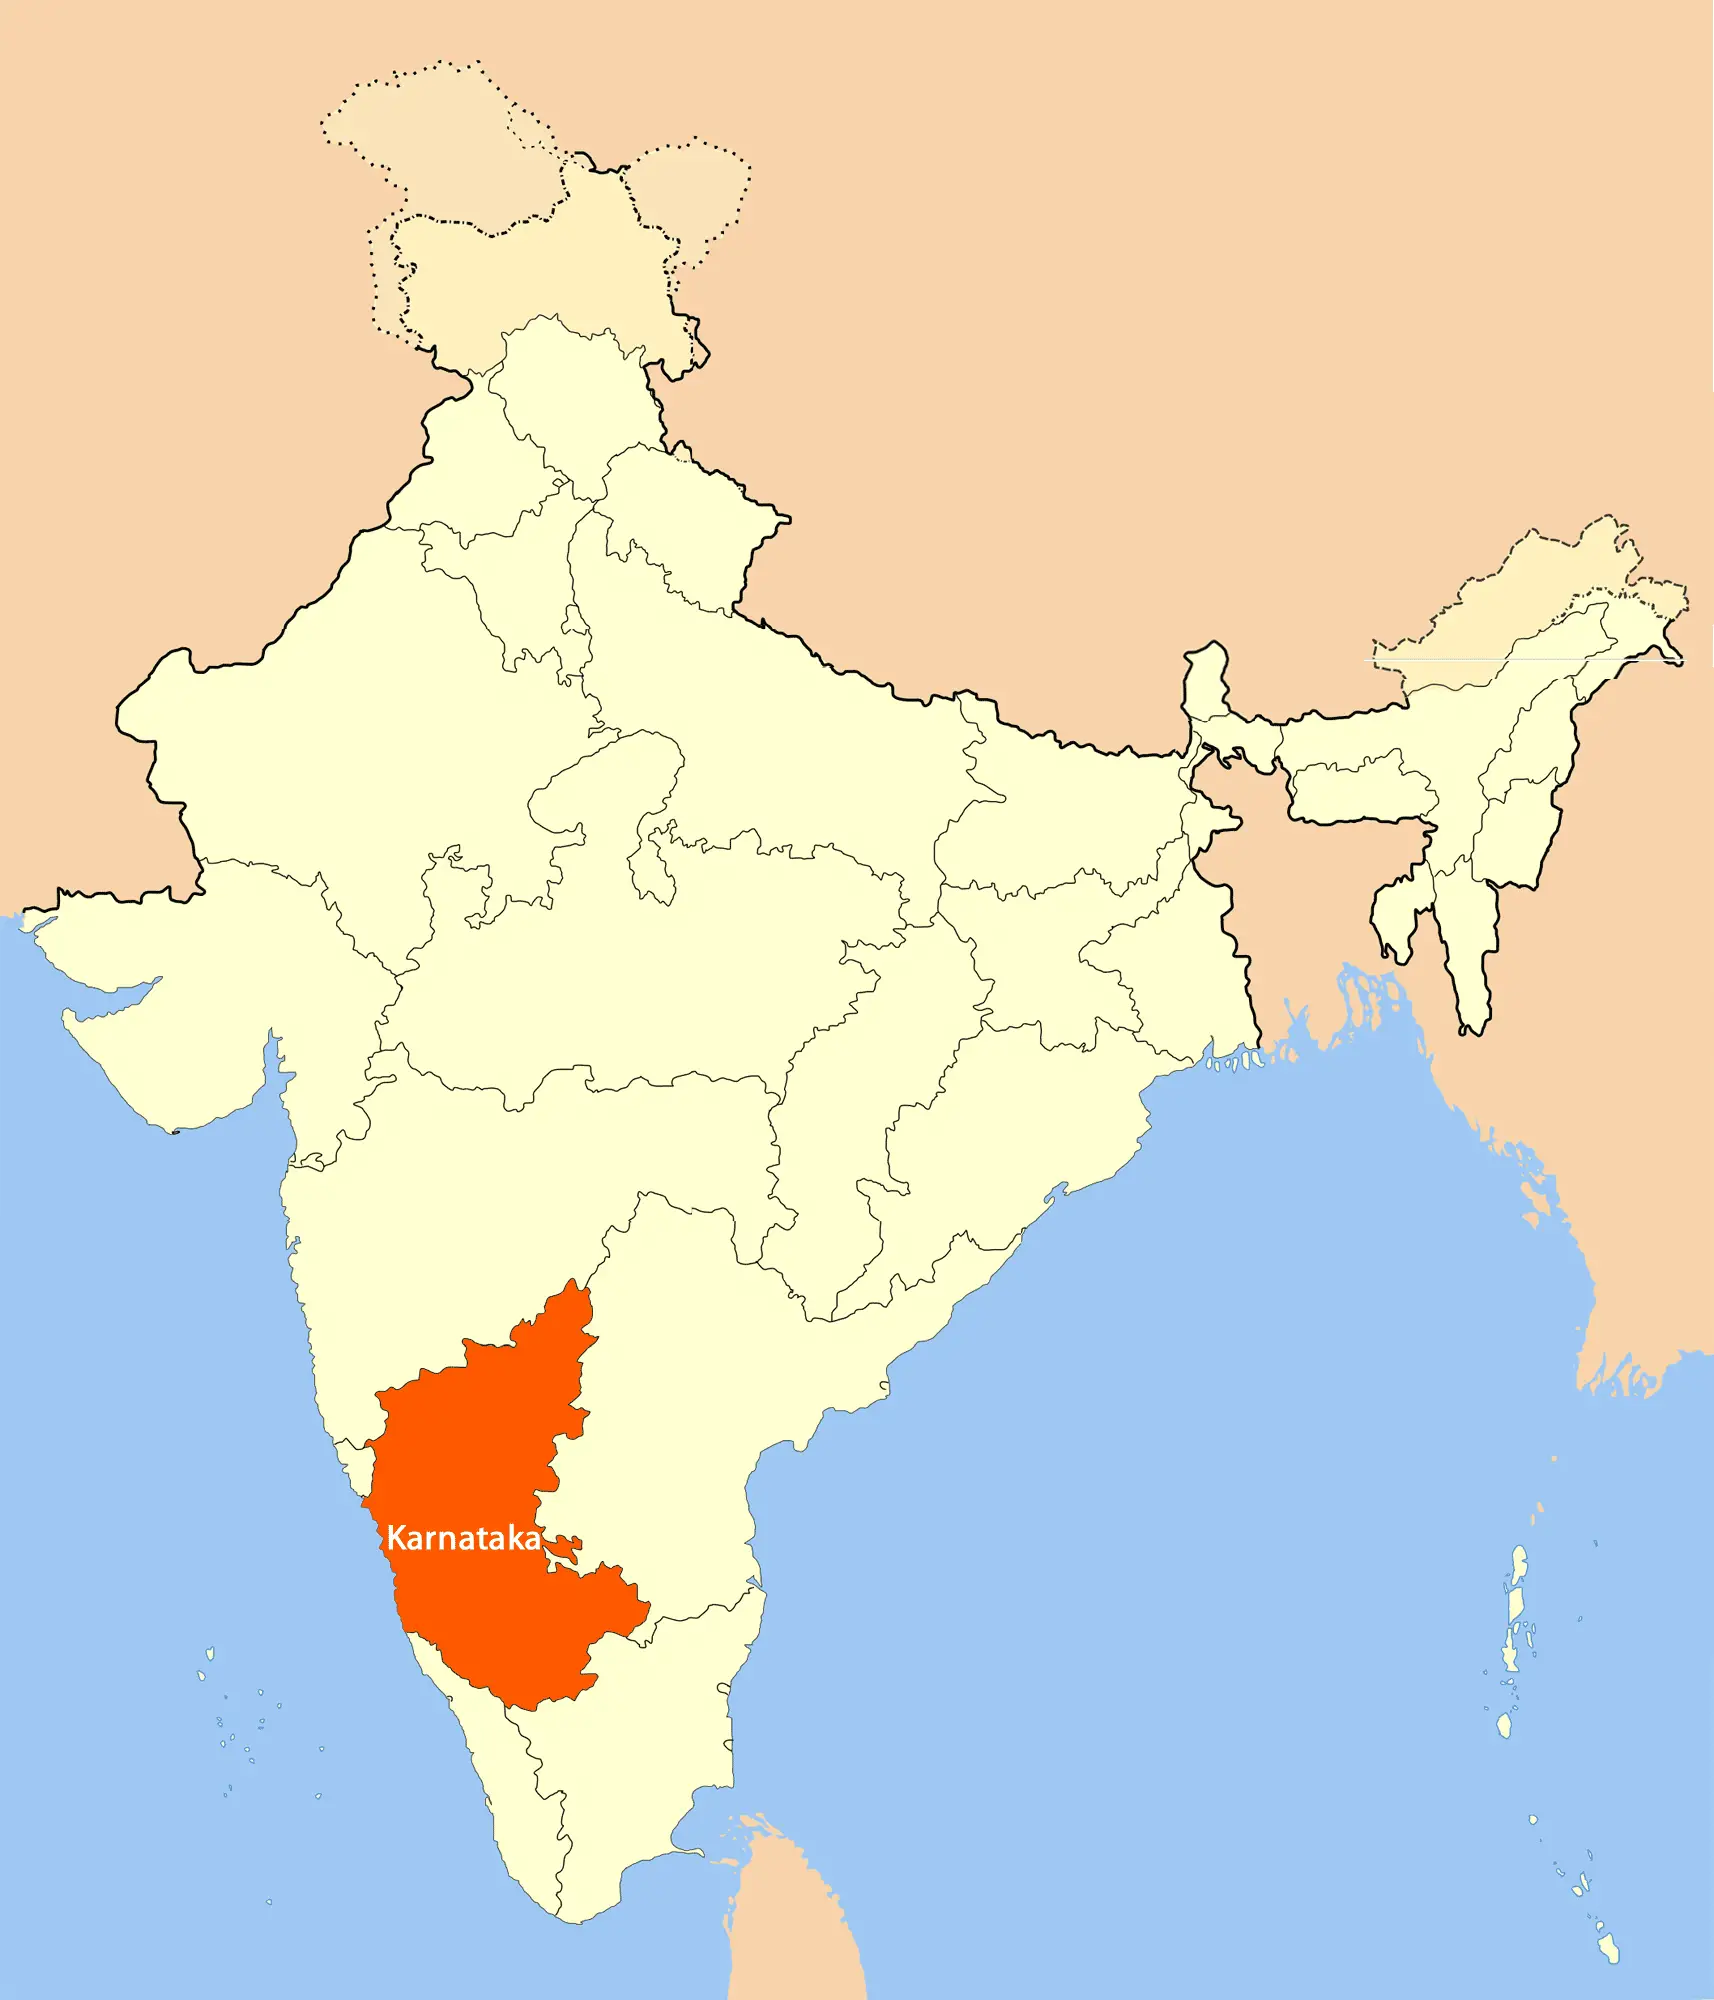 Karnataka On India Map Location Map Of Karnataka Where Is Karnataka Explore The Detailed